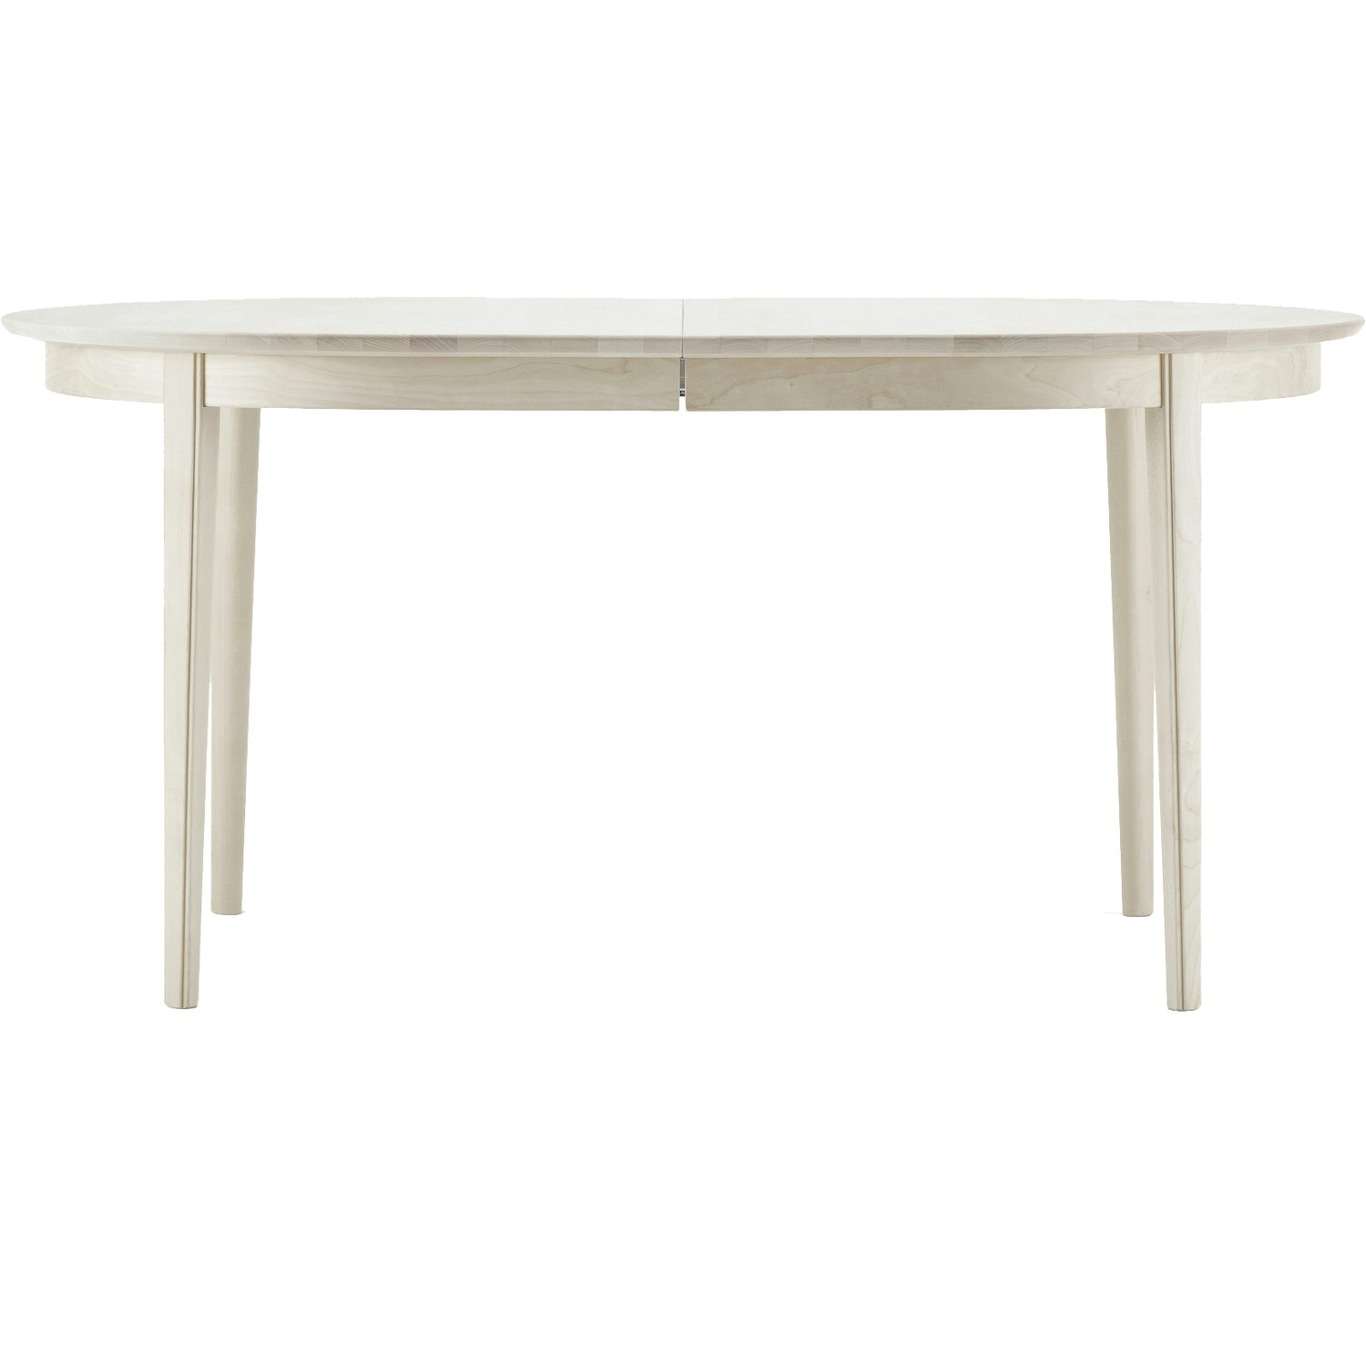 Vardags Spisebord Birk 100x160-260 cm, 2 Tillægsplader